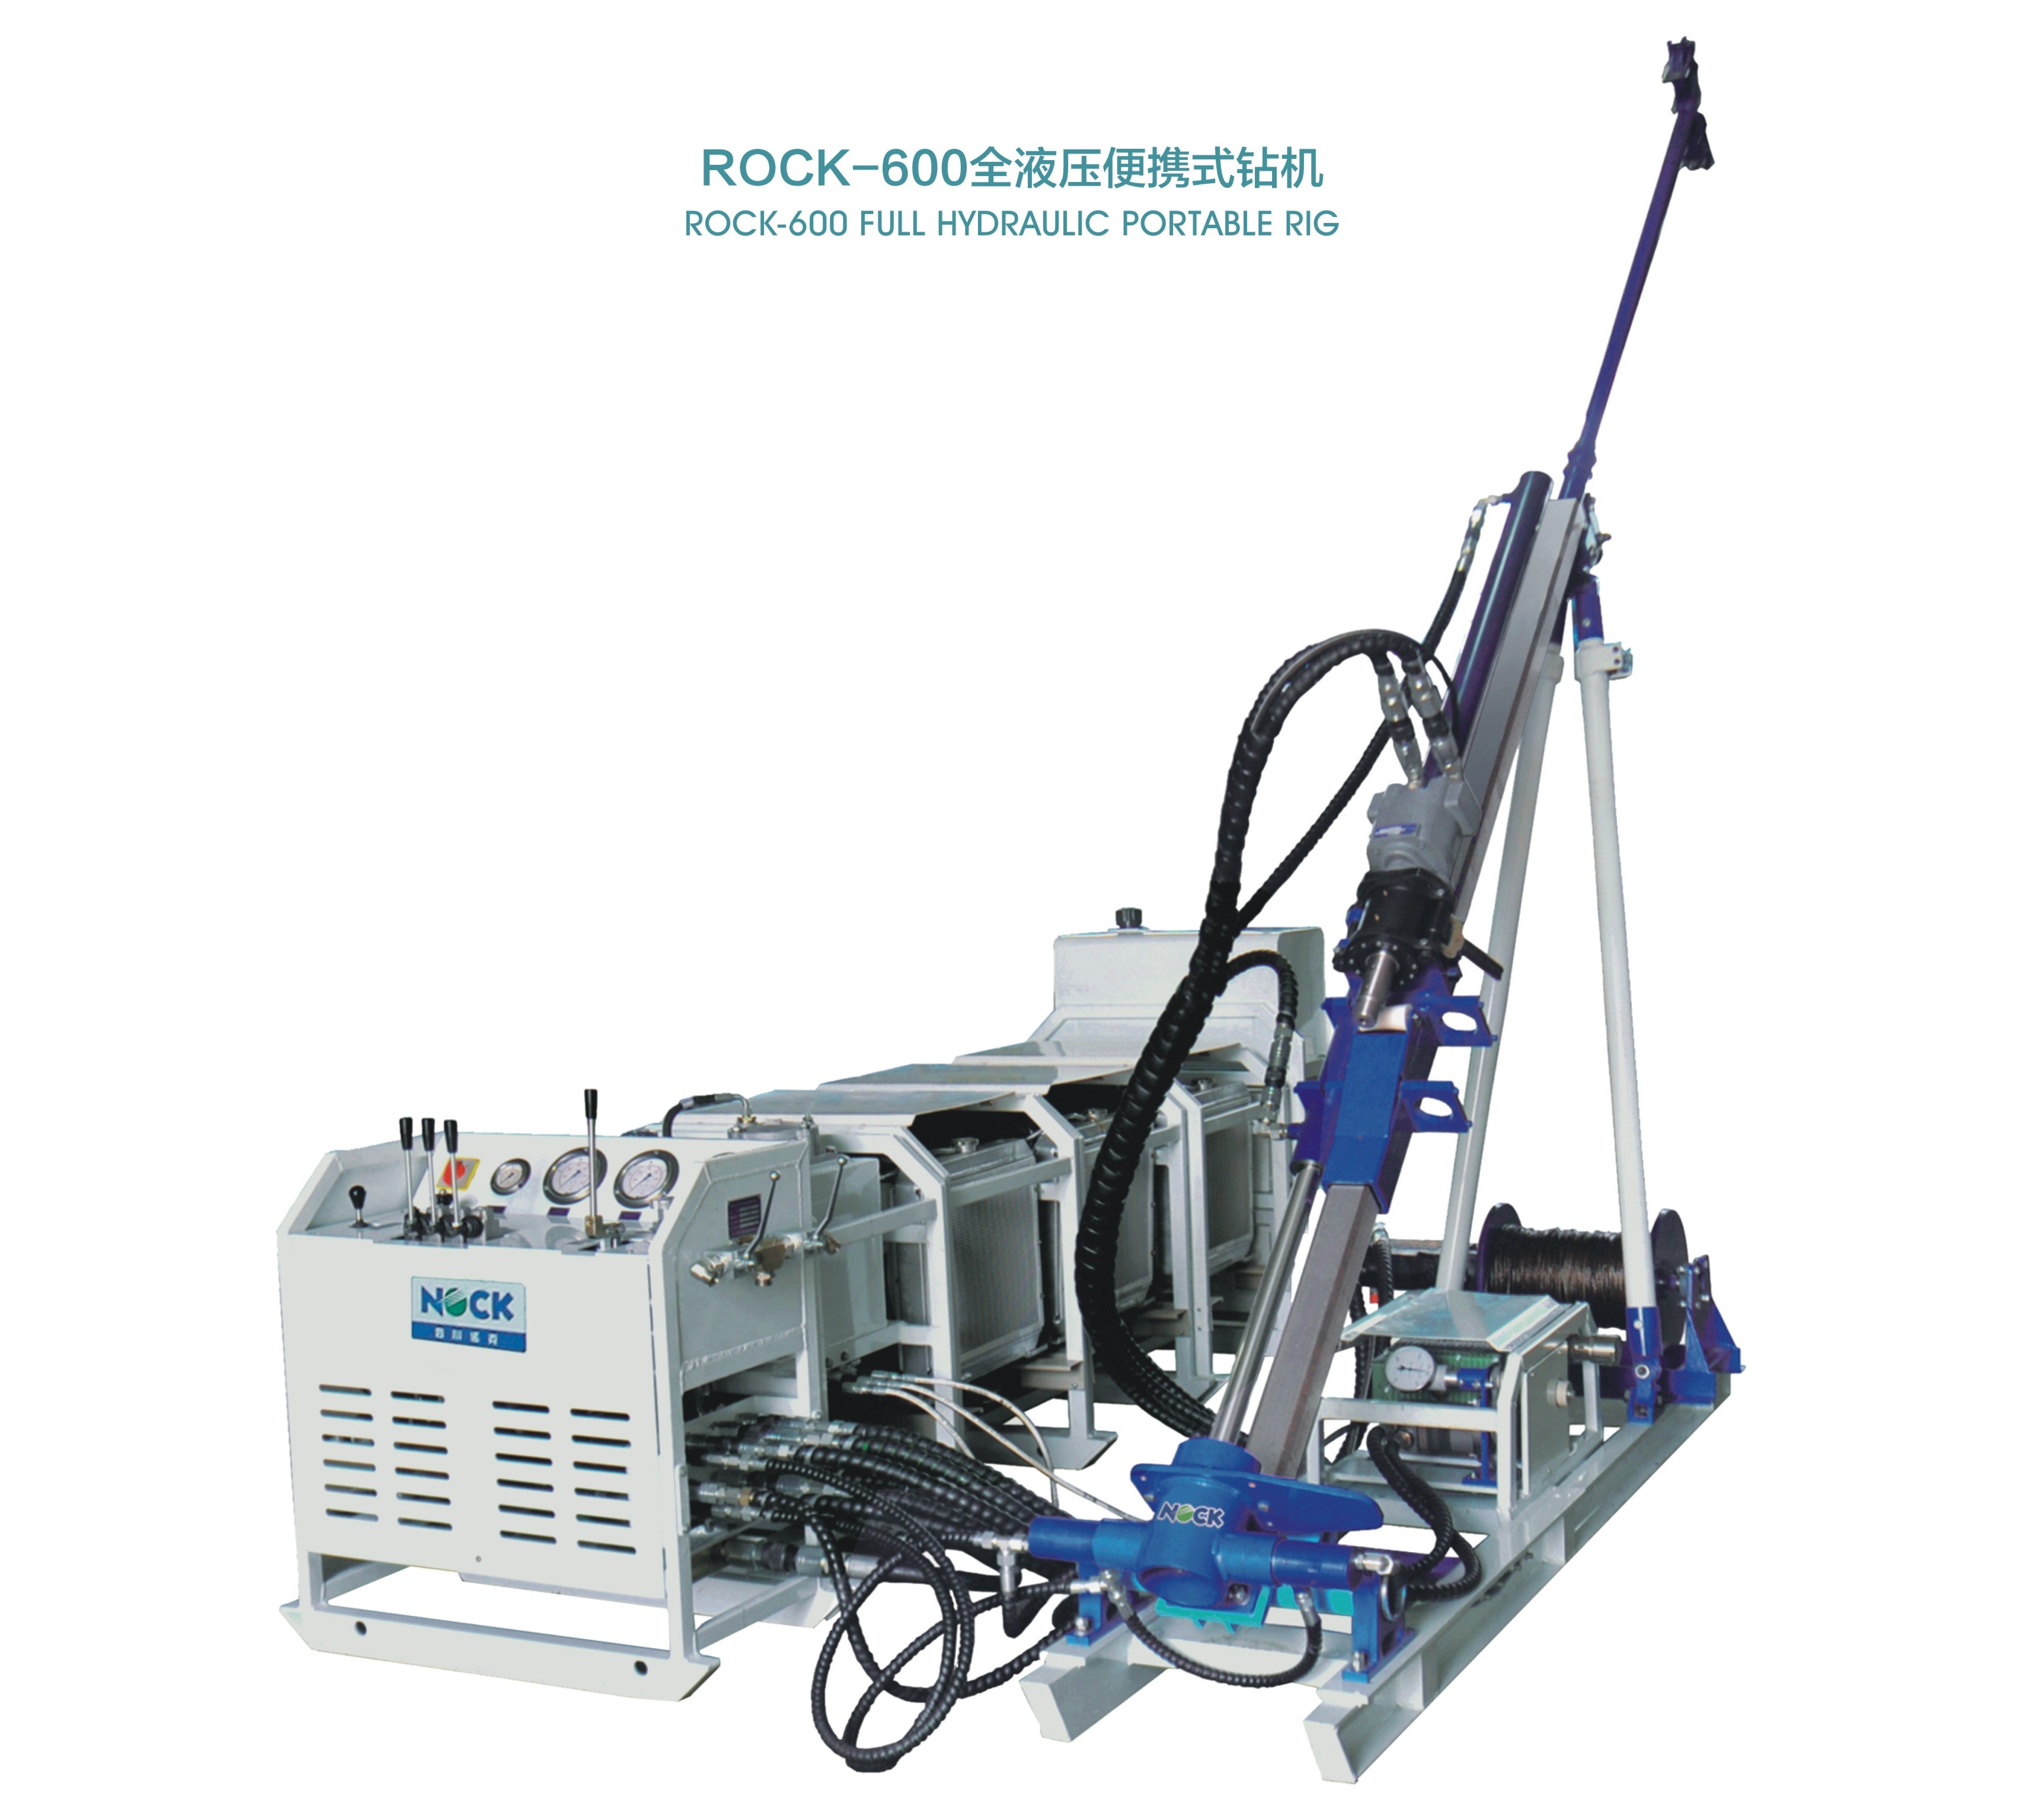 ROCK-600型全液压便携式钻机